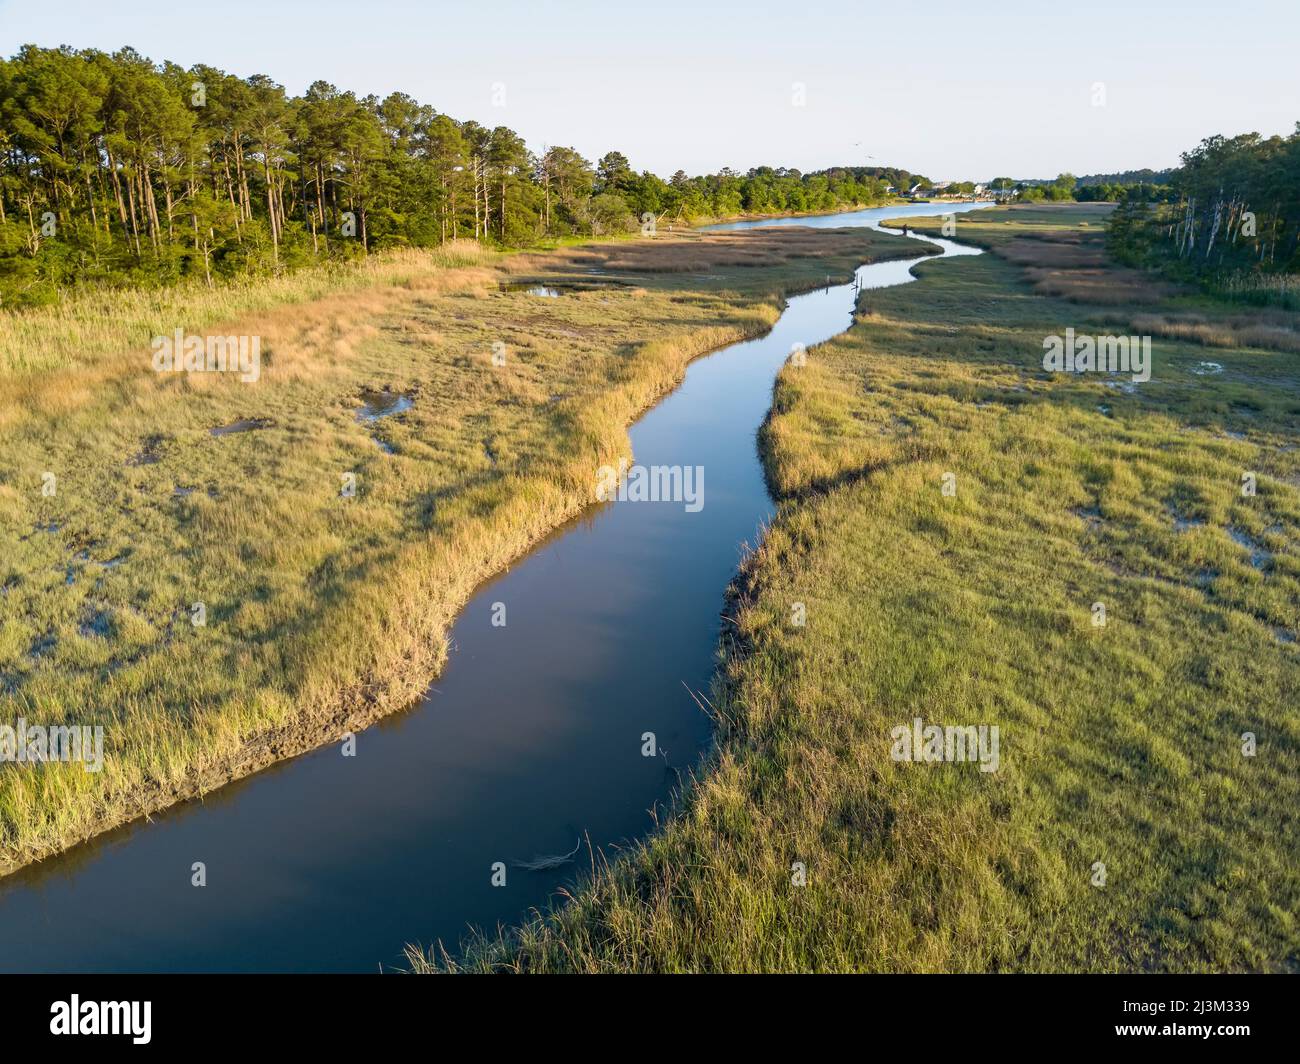 Salt marsh, creek and loblolly pine trees near the Chesapeake Bay.; Hampton, Fox Hill - Grandview, VA, USA Stock Photo